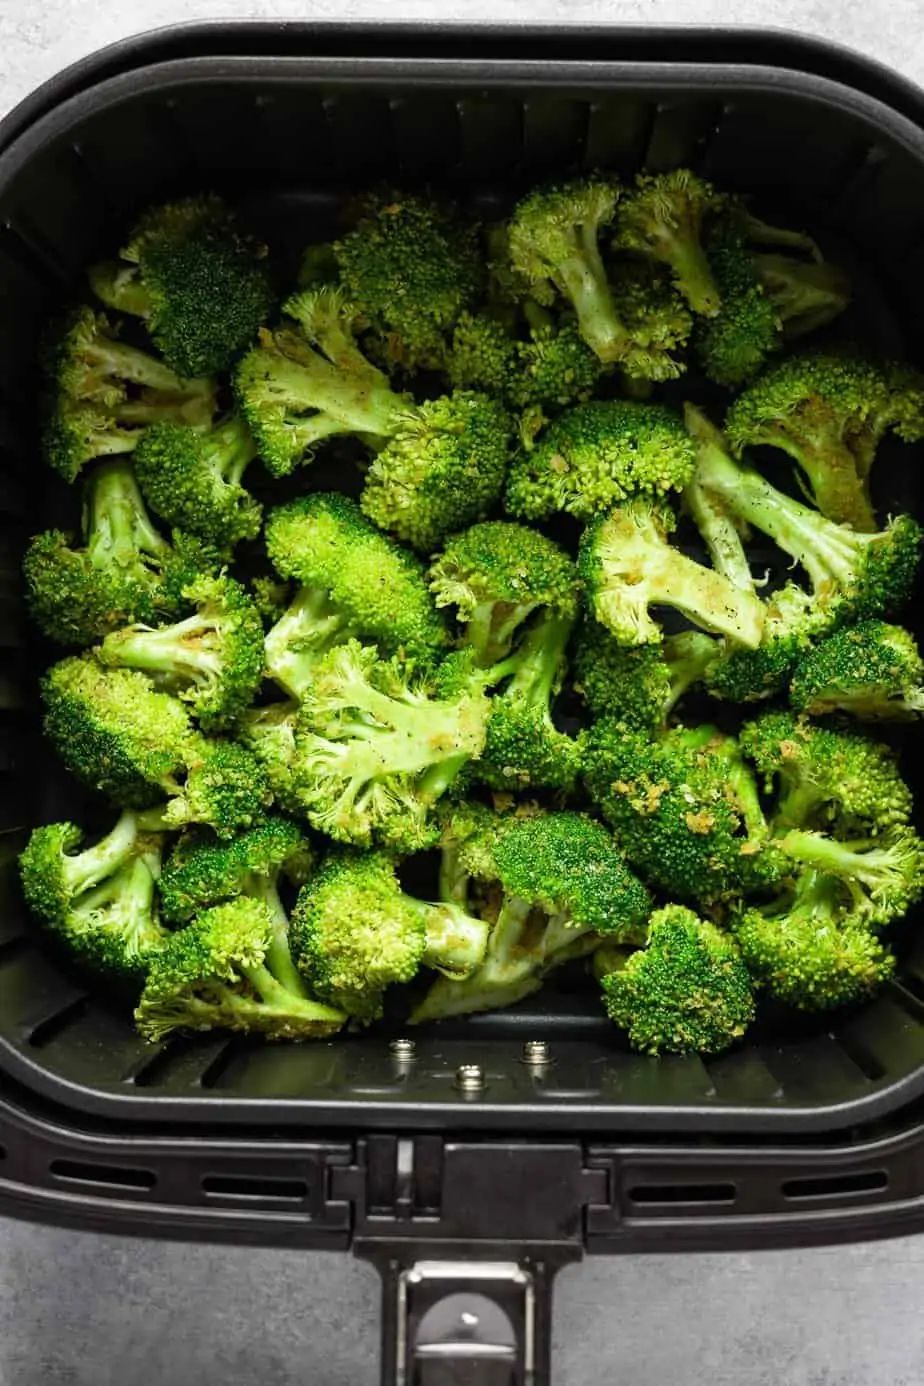 arranged broccoli inside the air fryer basket